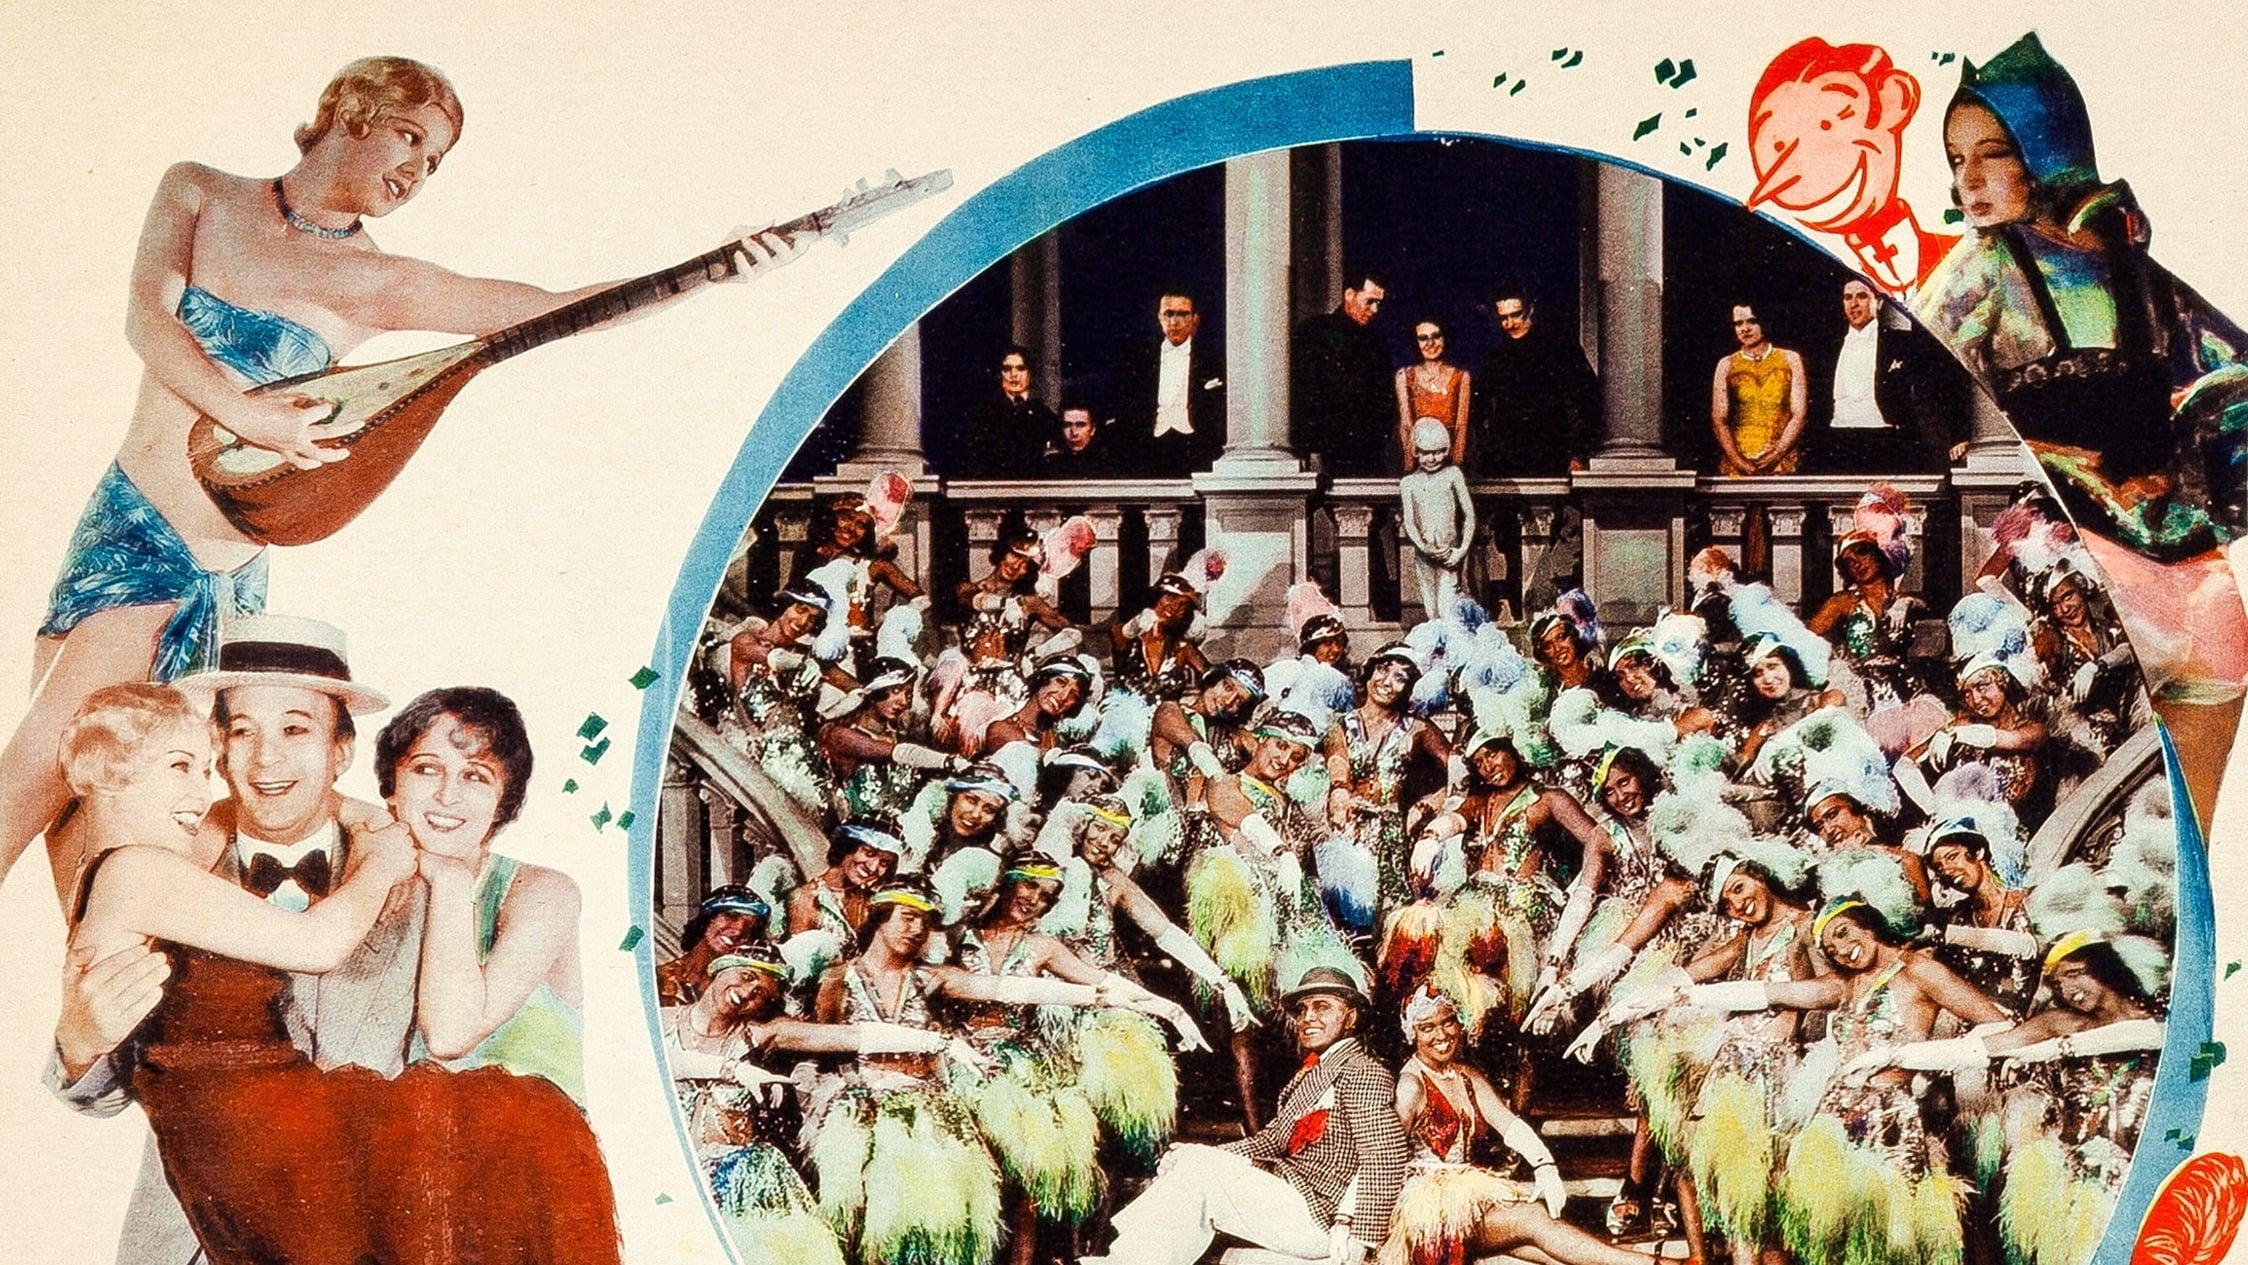 New Movietone Follies of 1930 backdrop